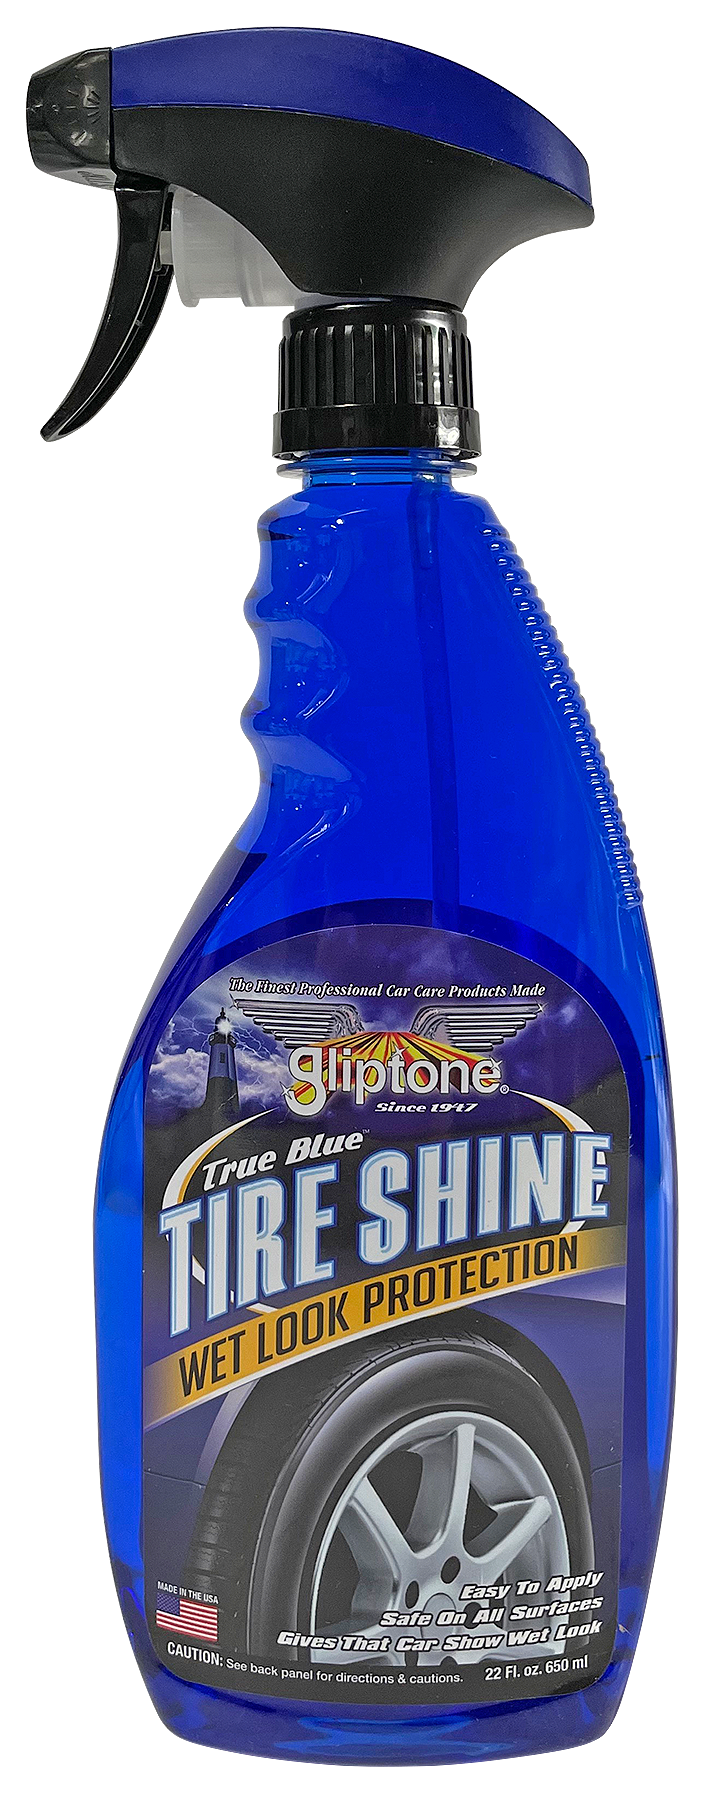 Tire Shine